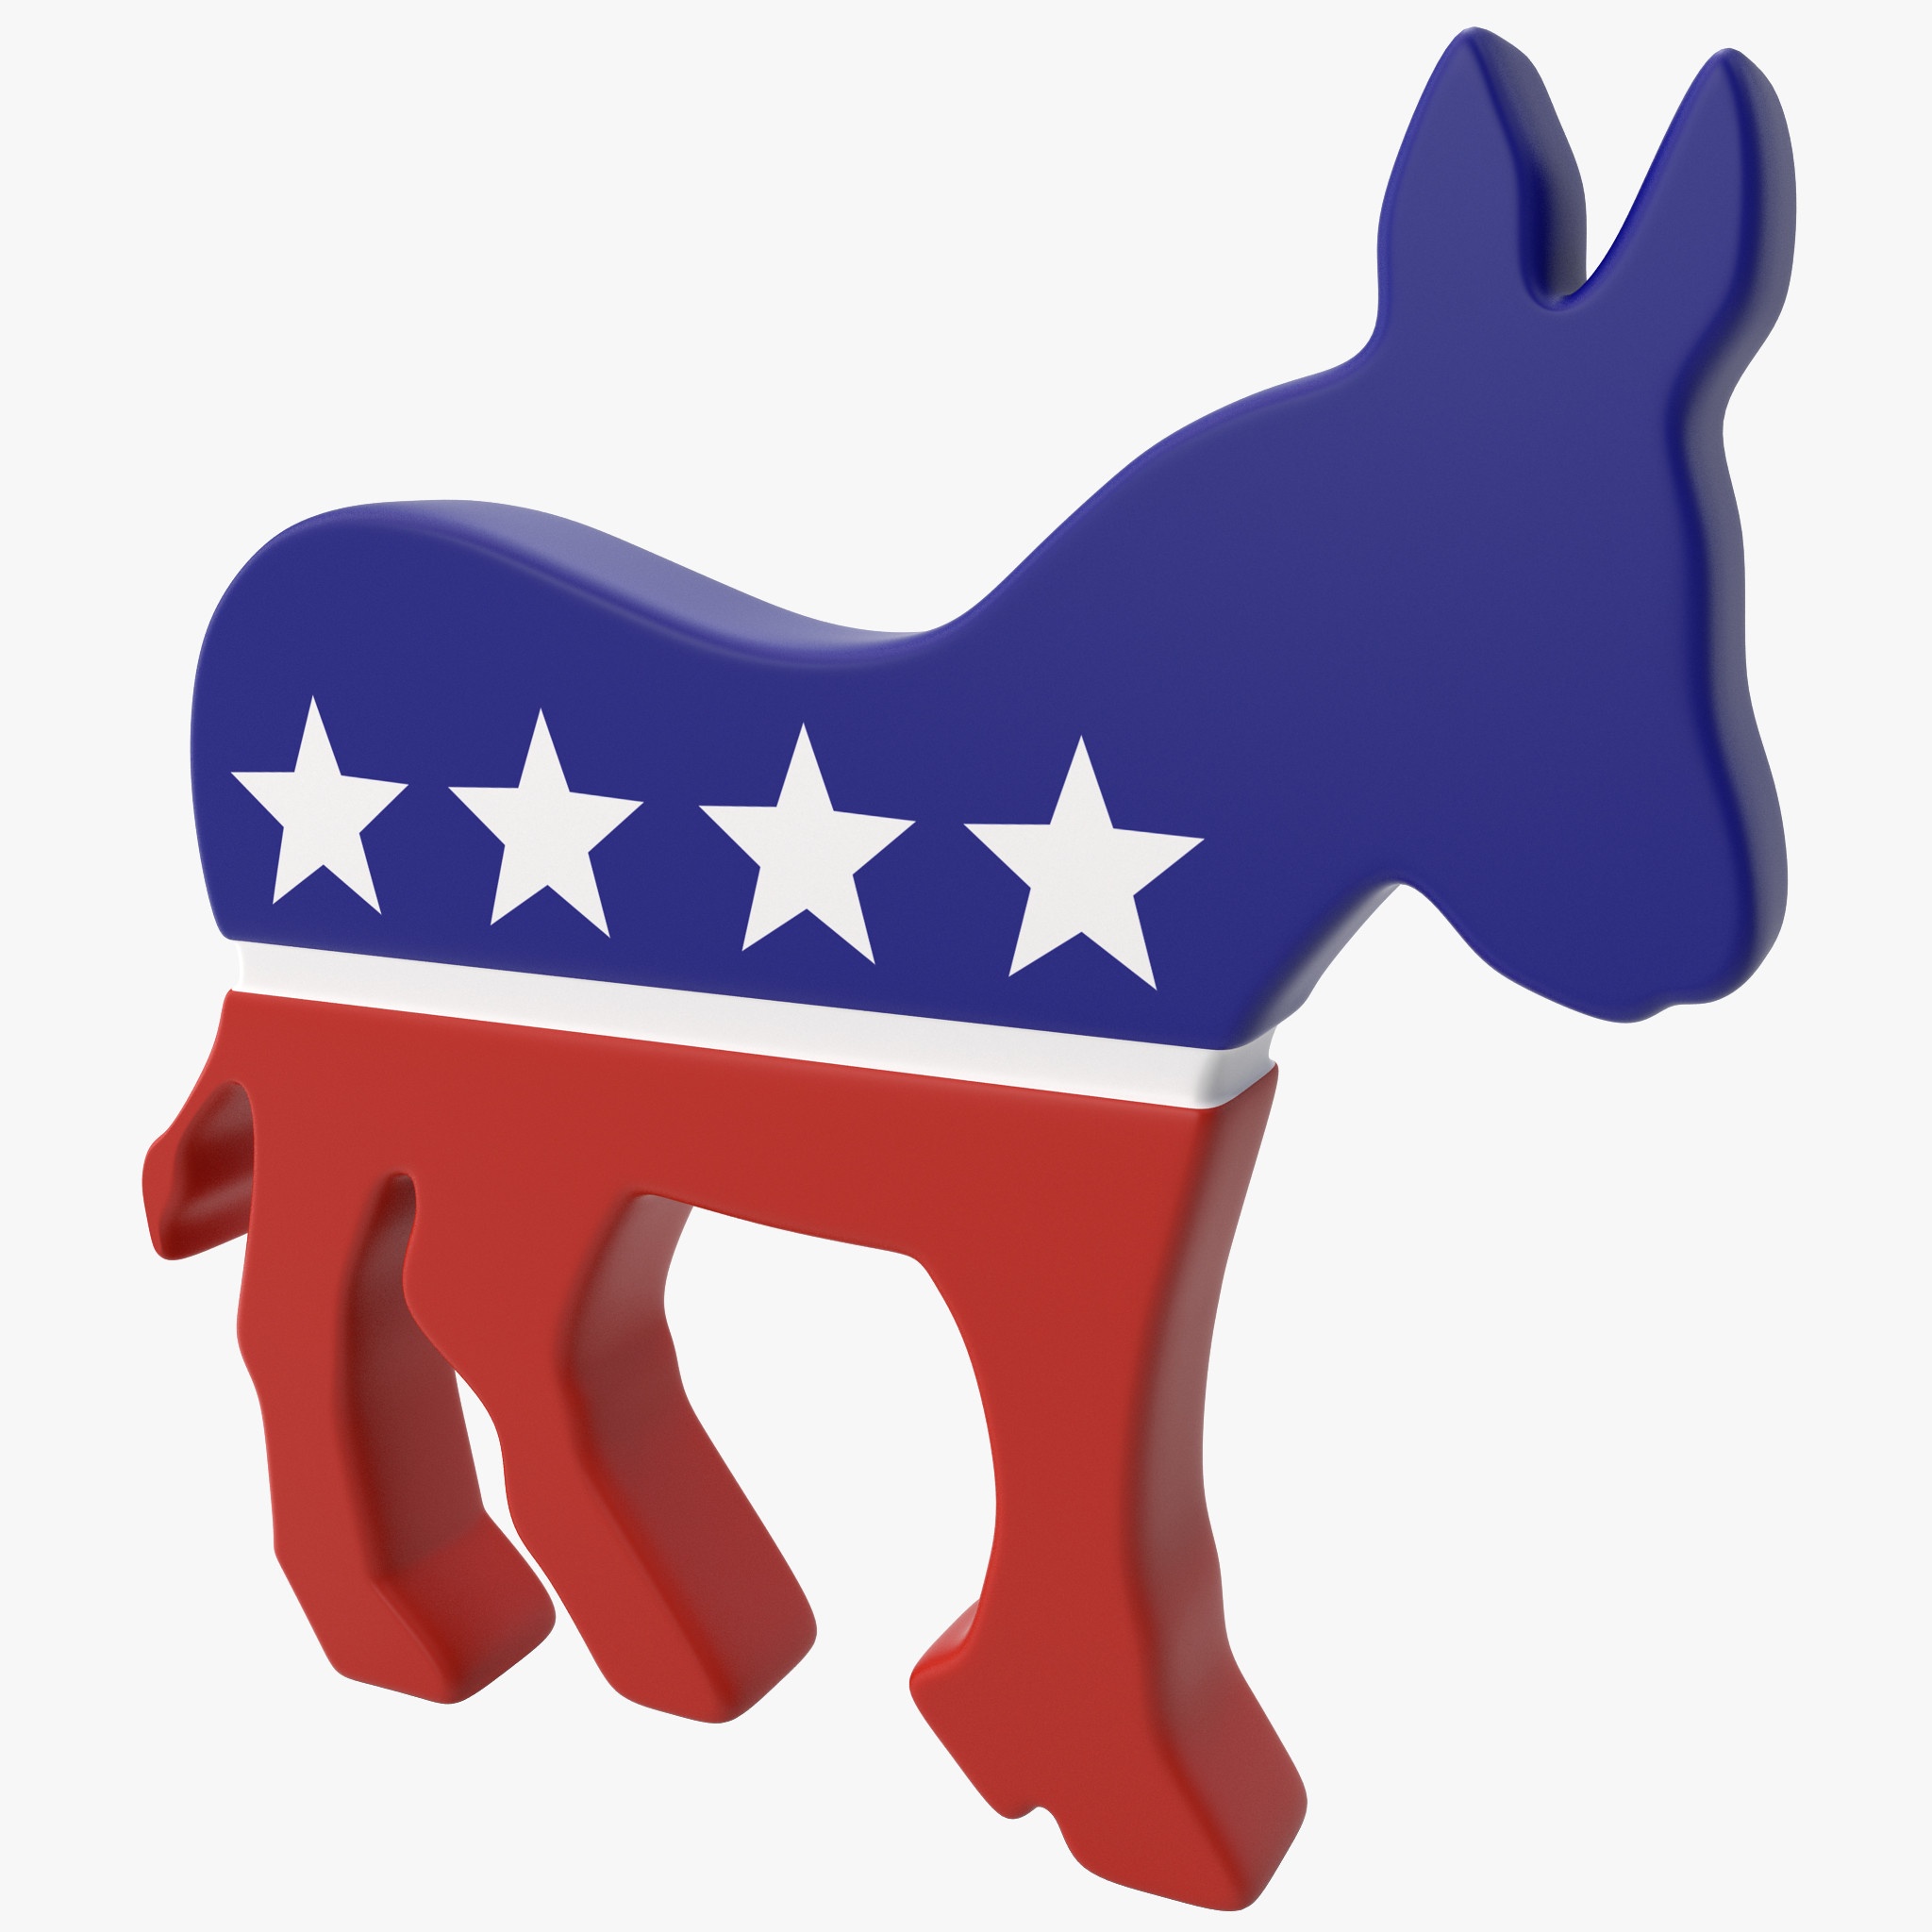 Democrat Party donkey symbol – The Post & Email